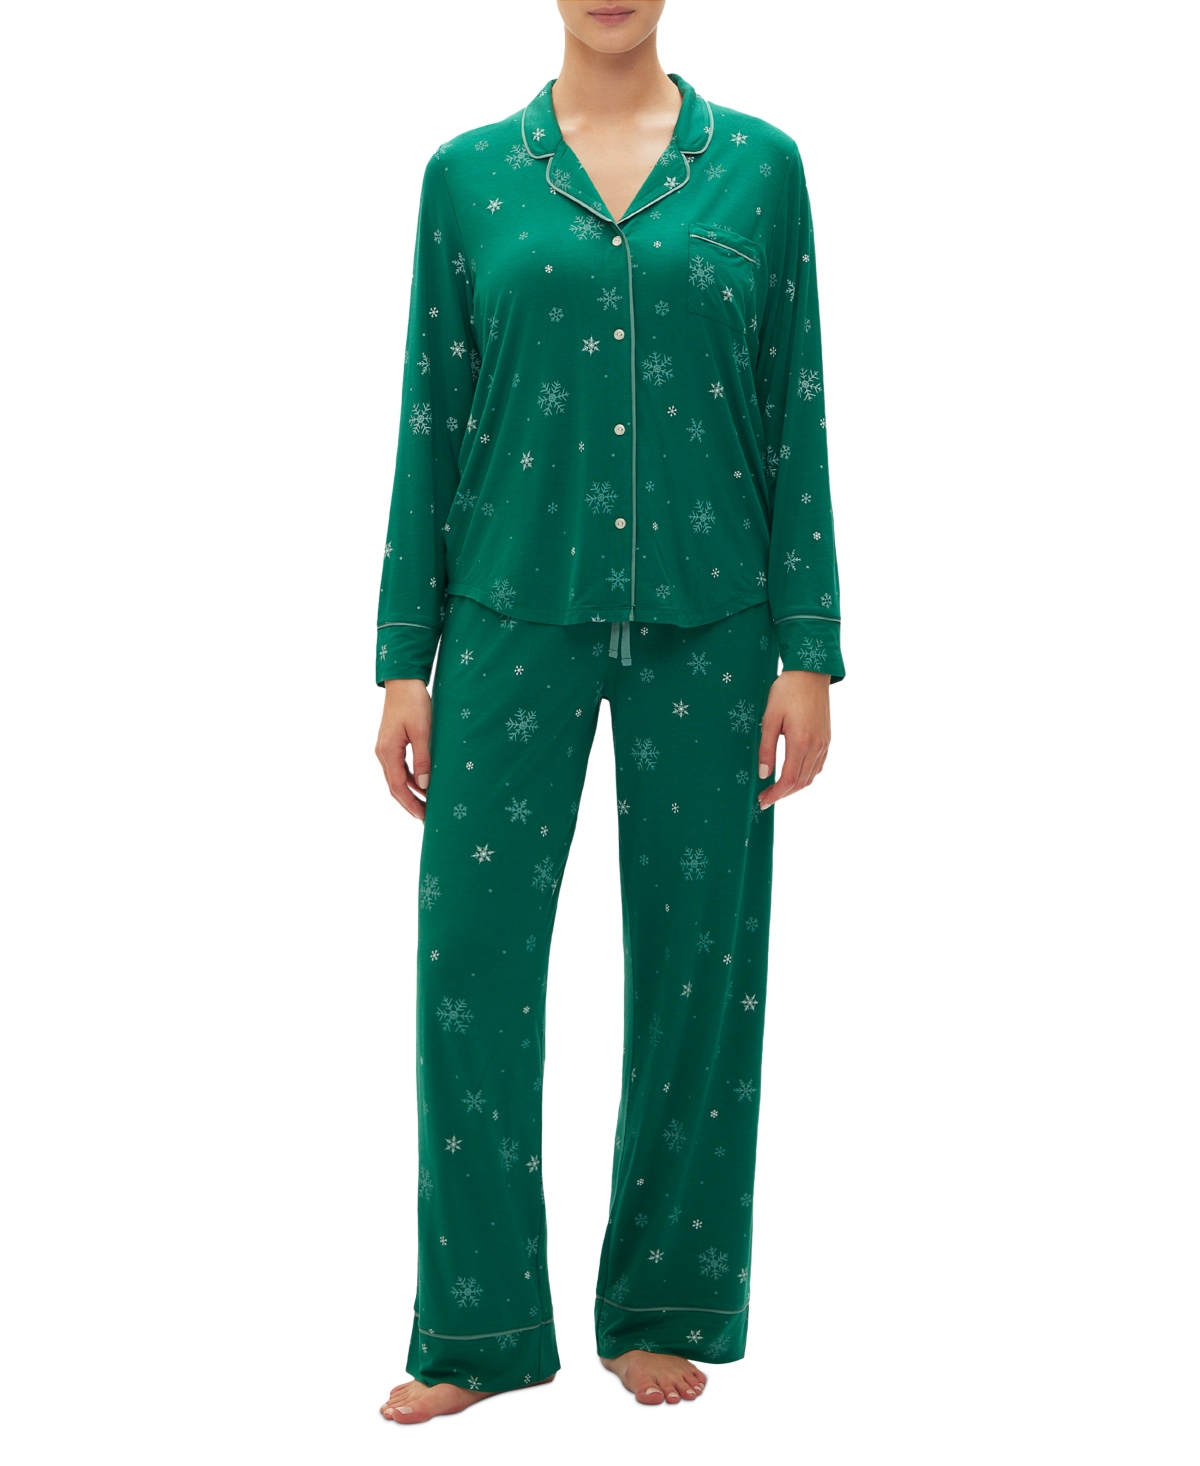 Gap Body Women's 2-pc. Notched-collar Long-sleeve Pajamas Set In Apple Green Snowflake